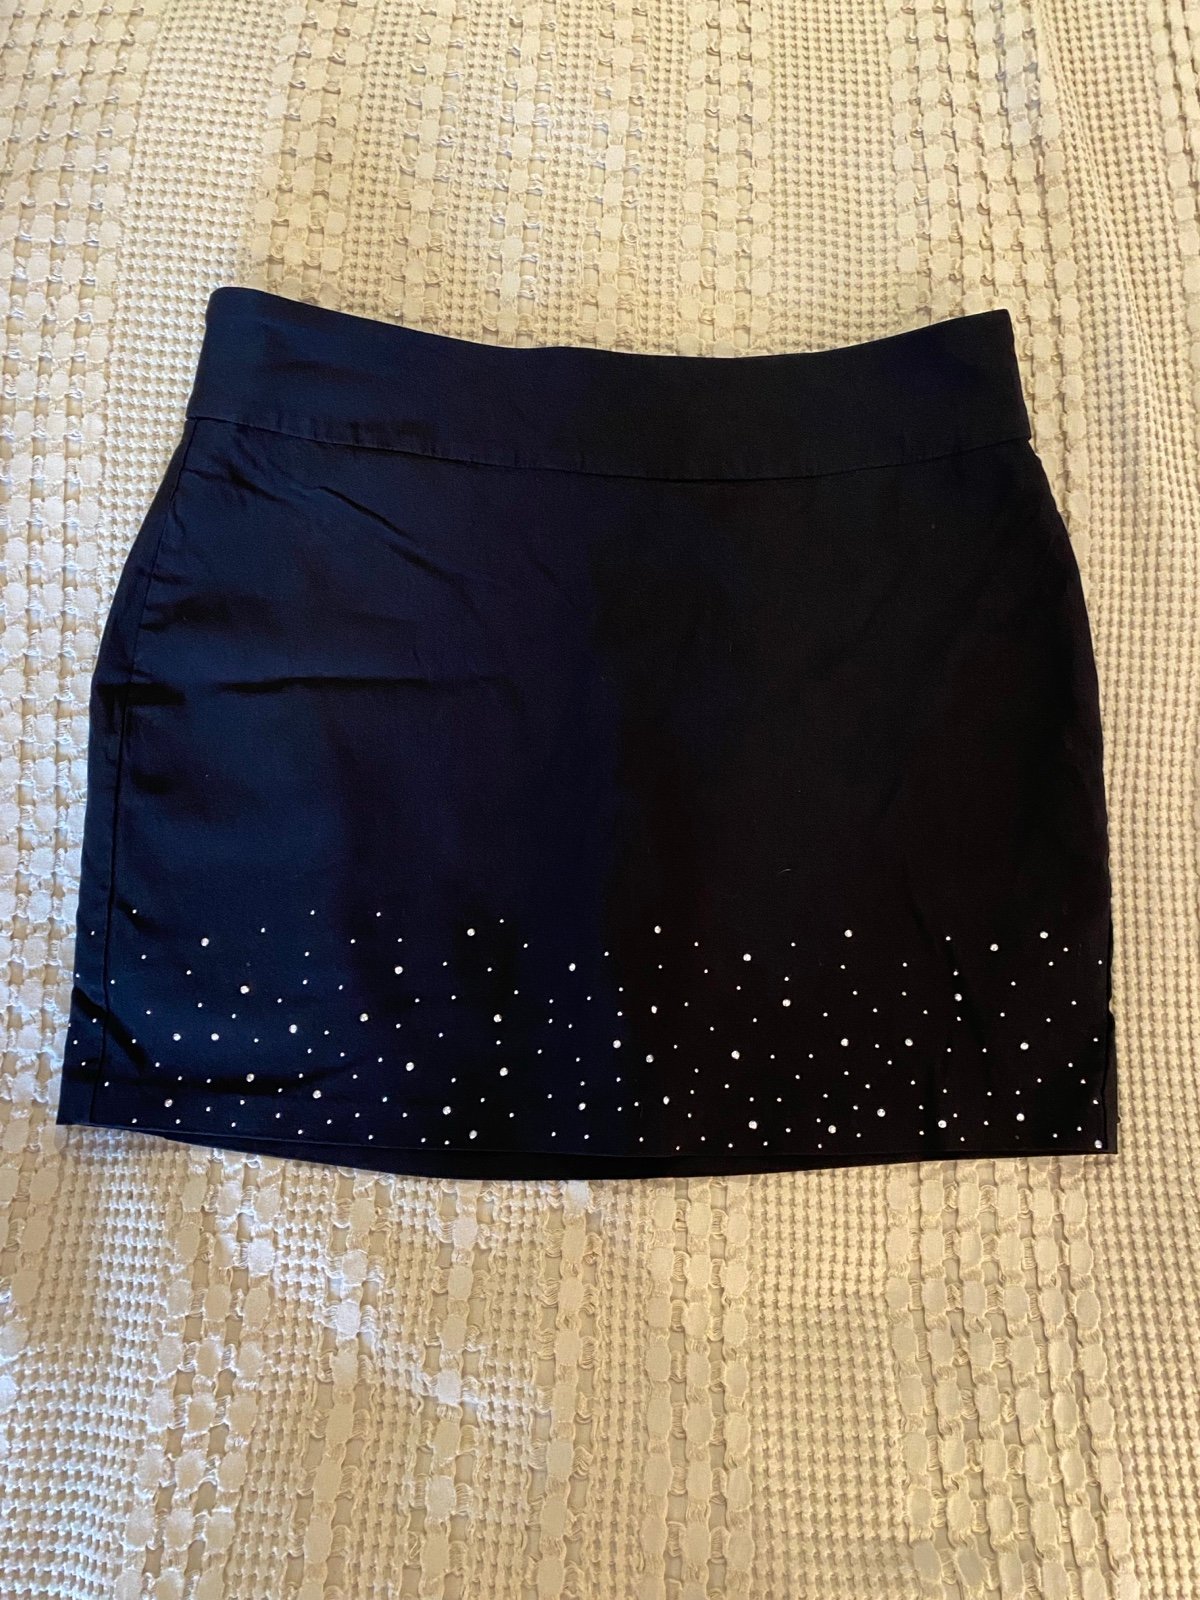 Gorgeous Attyre Black Skort skirt w/ built in Shorts w/ Rhinestones Size 16W i8voRqjhA outlet online shop